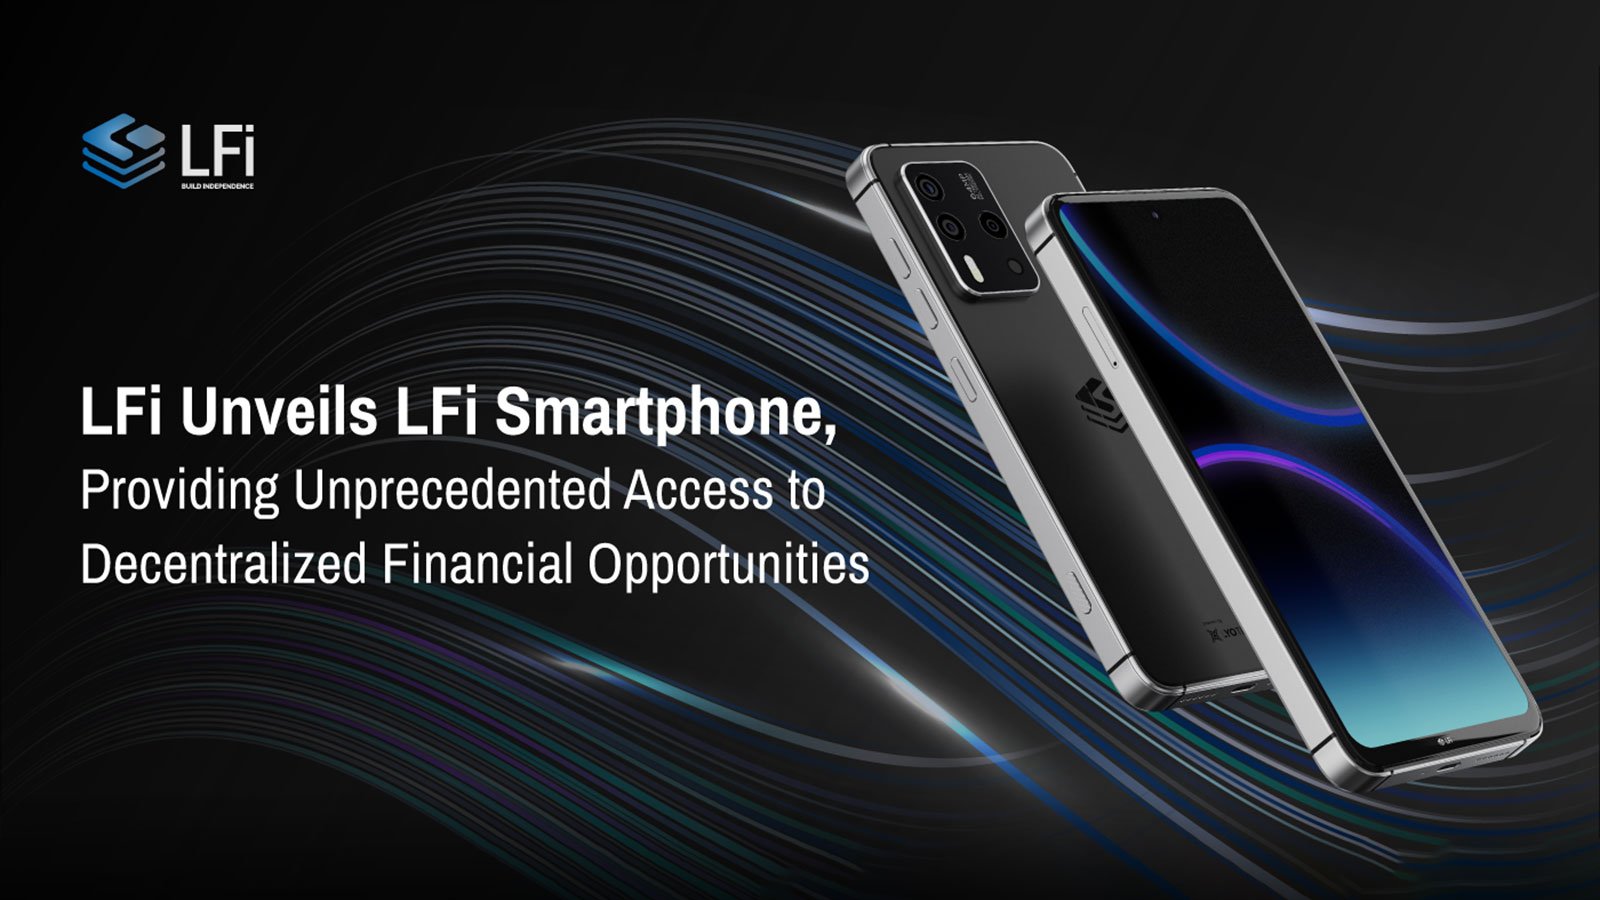 LFi Unveils LFi Smartphone, Providing Unprecedented Access to Decentralized Financial Opportunities